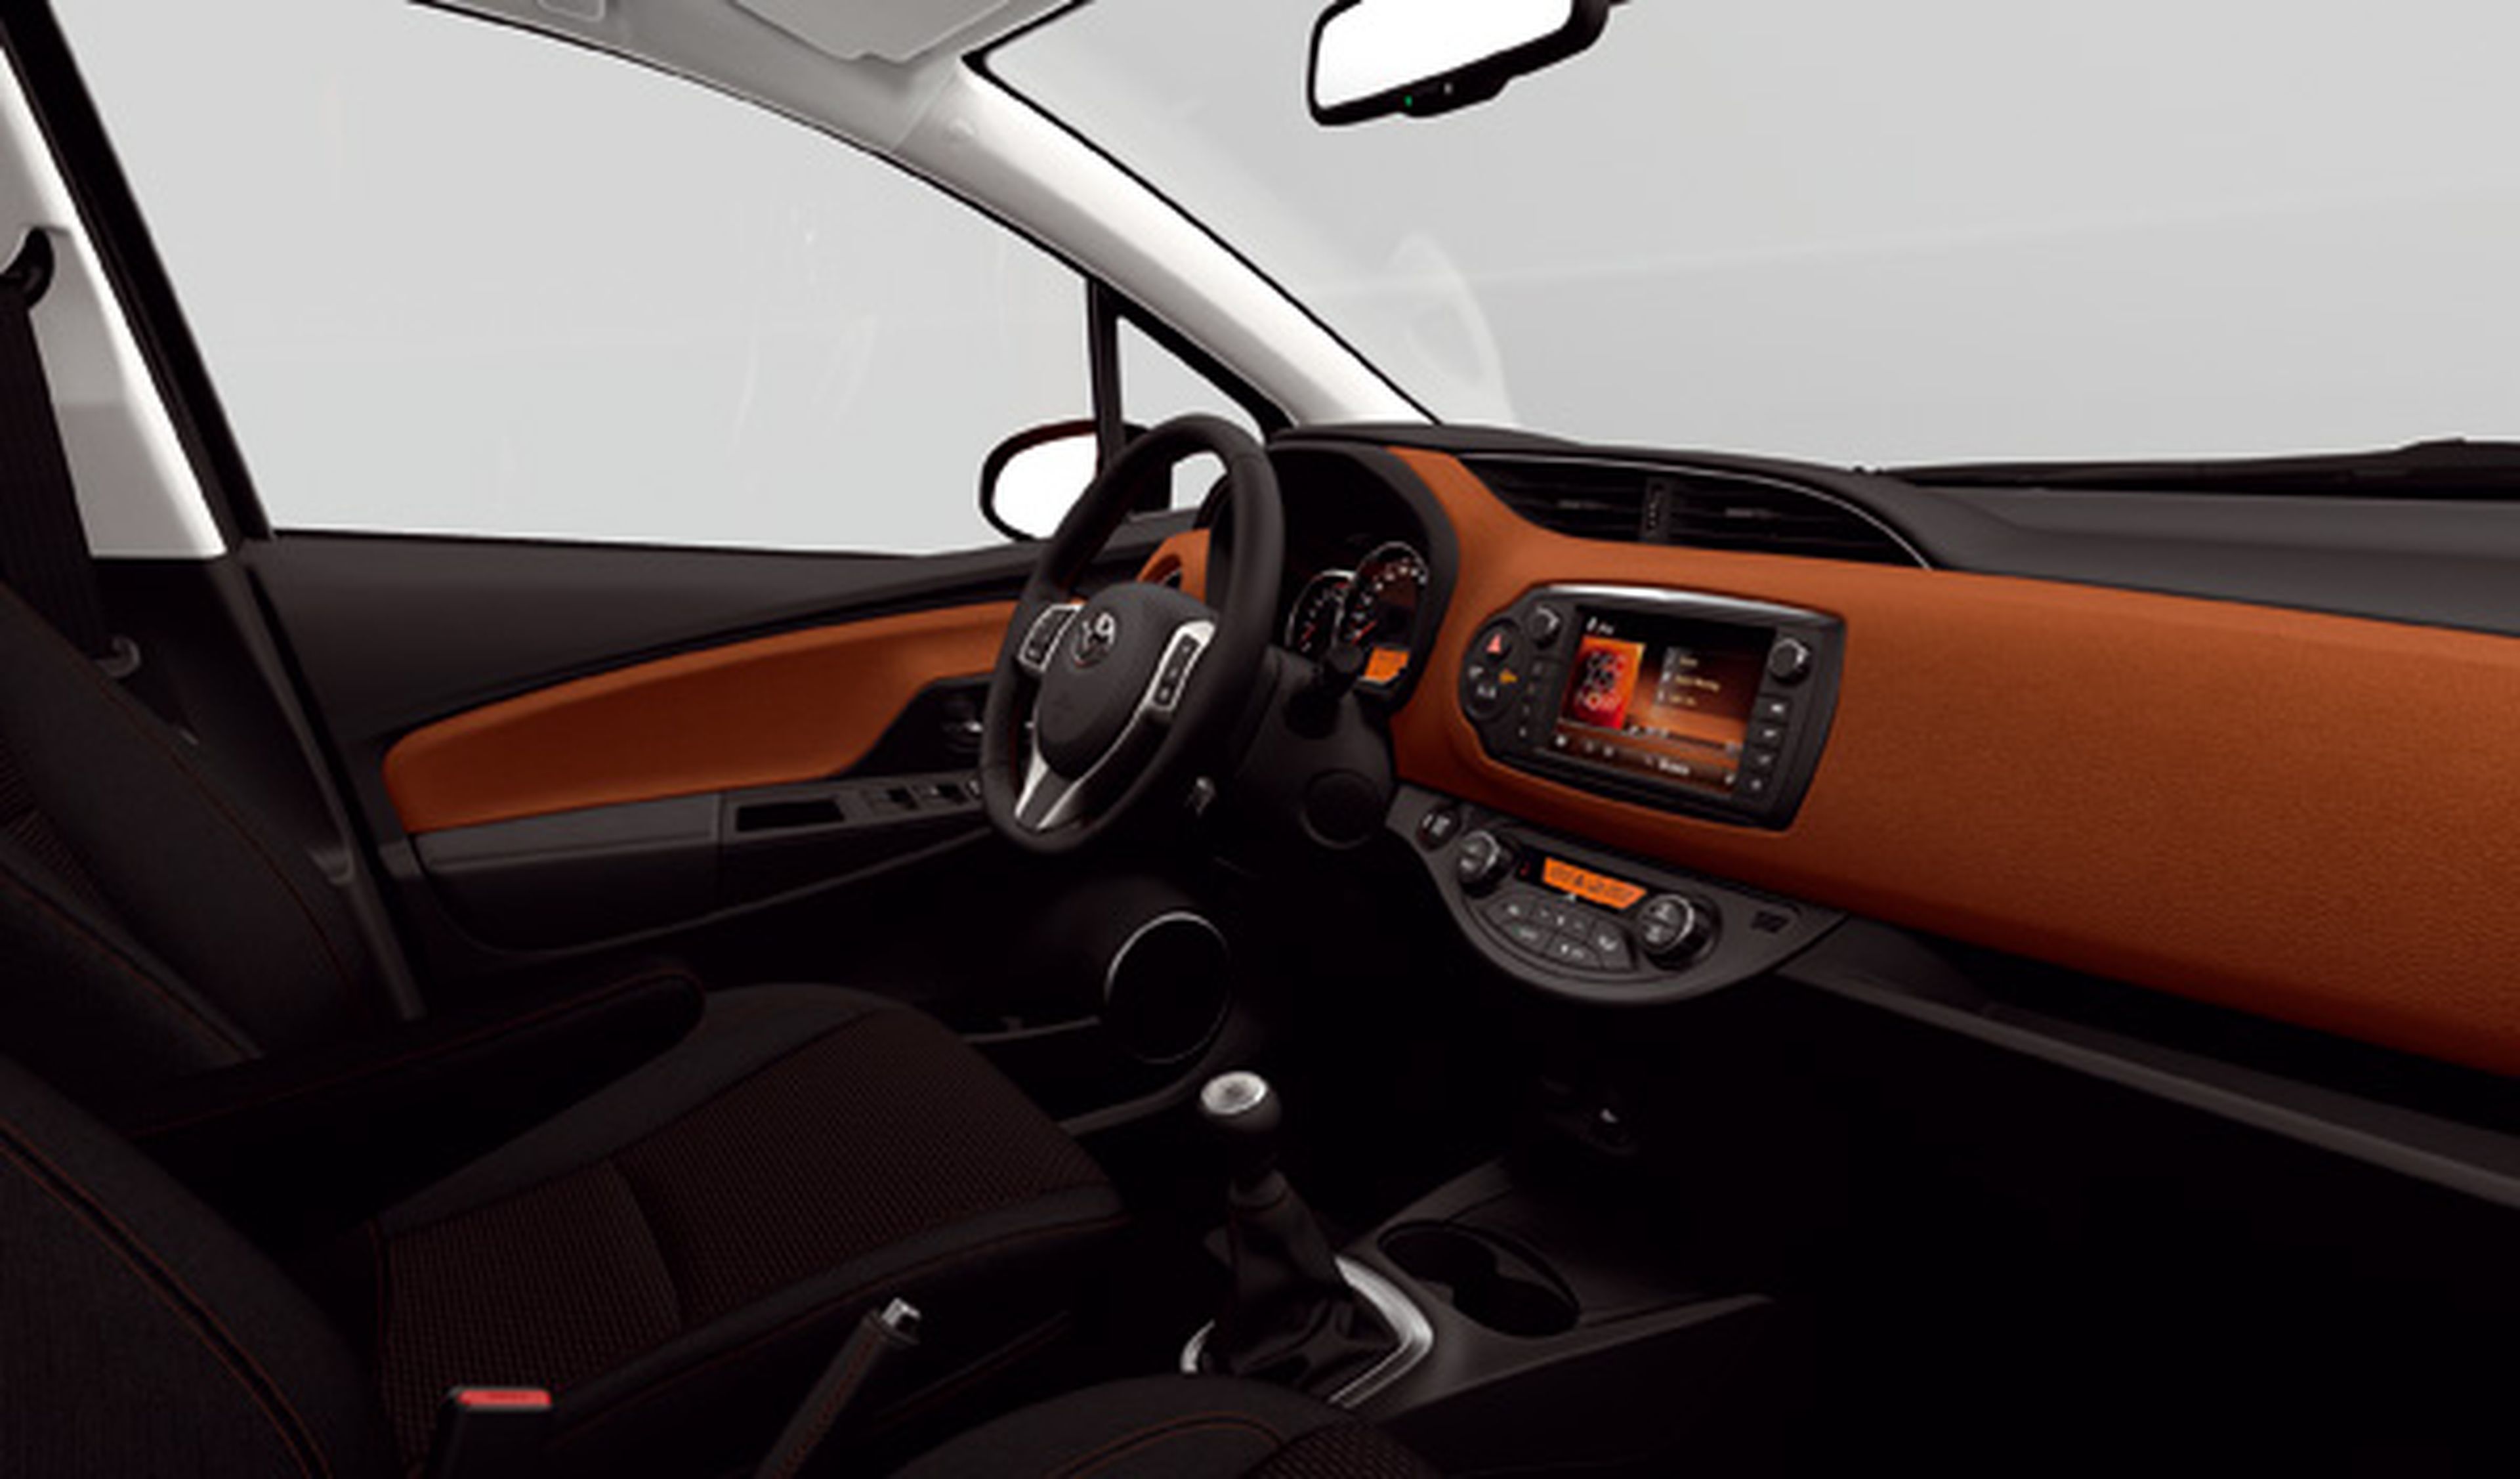 Toyota Yaris 2014 interior